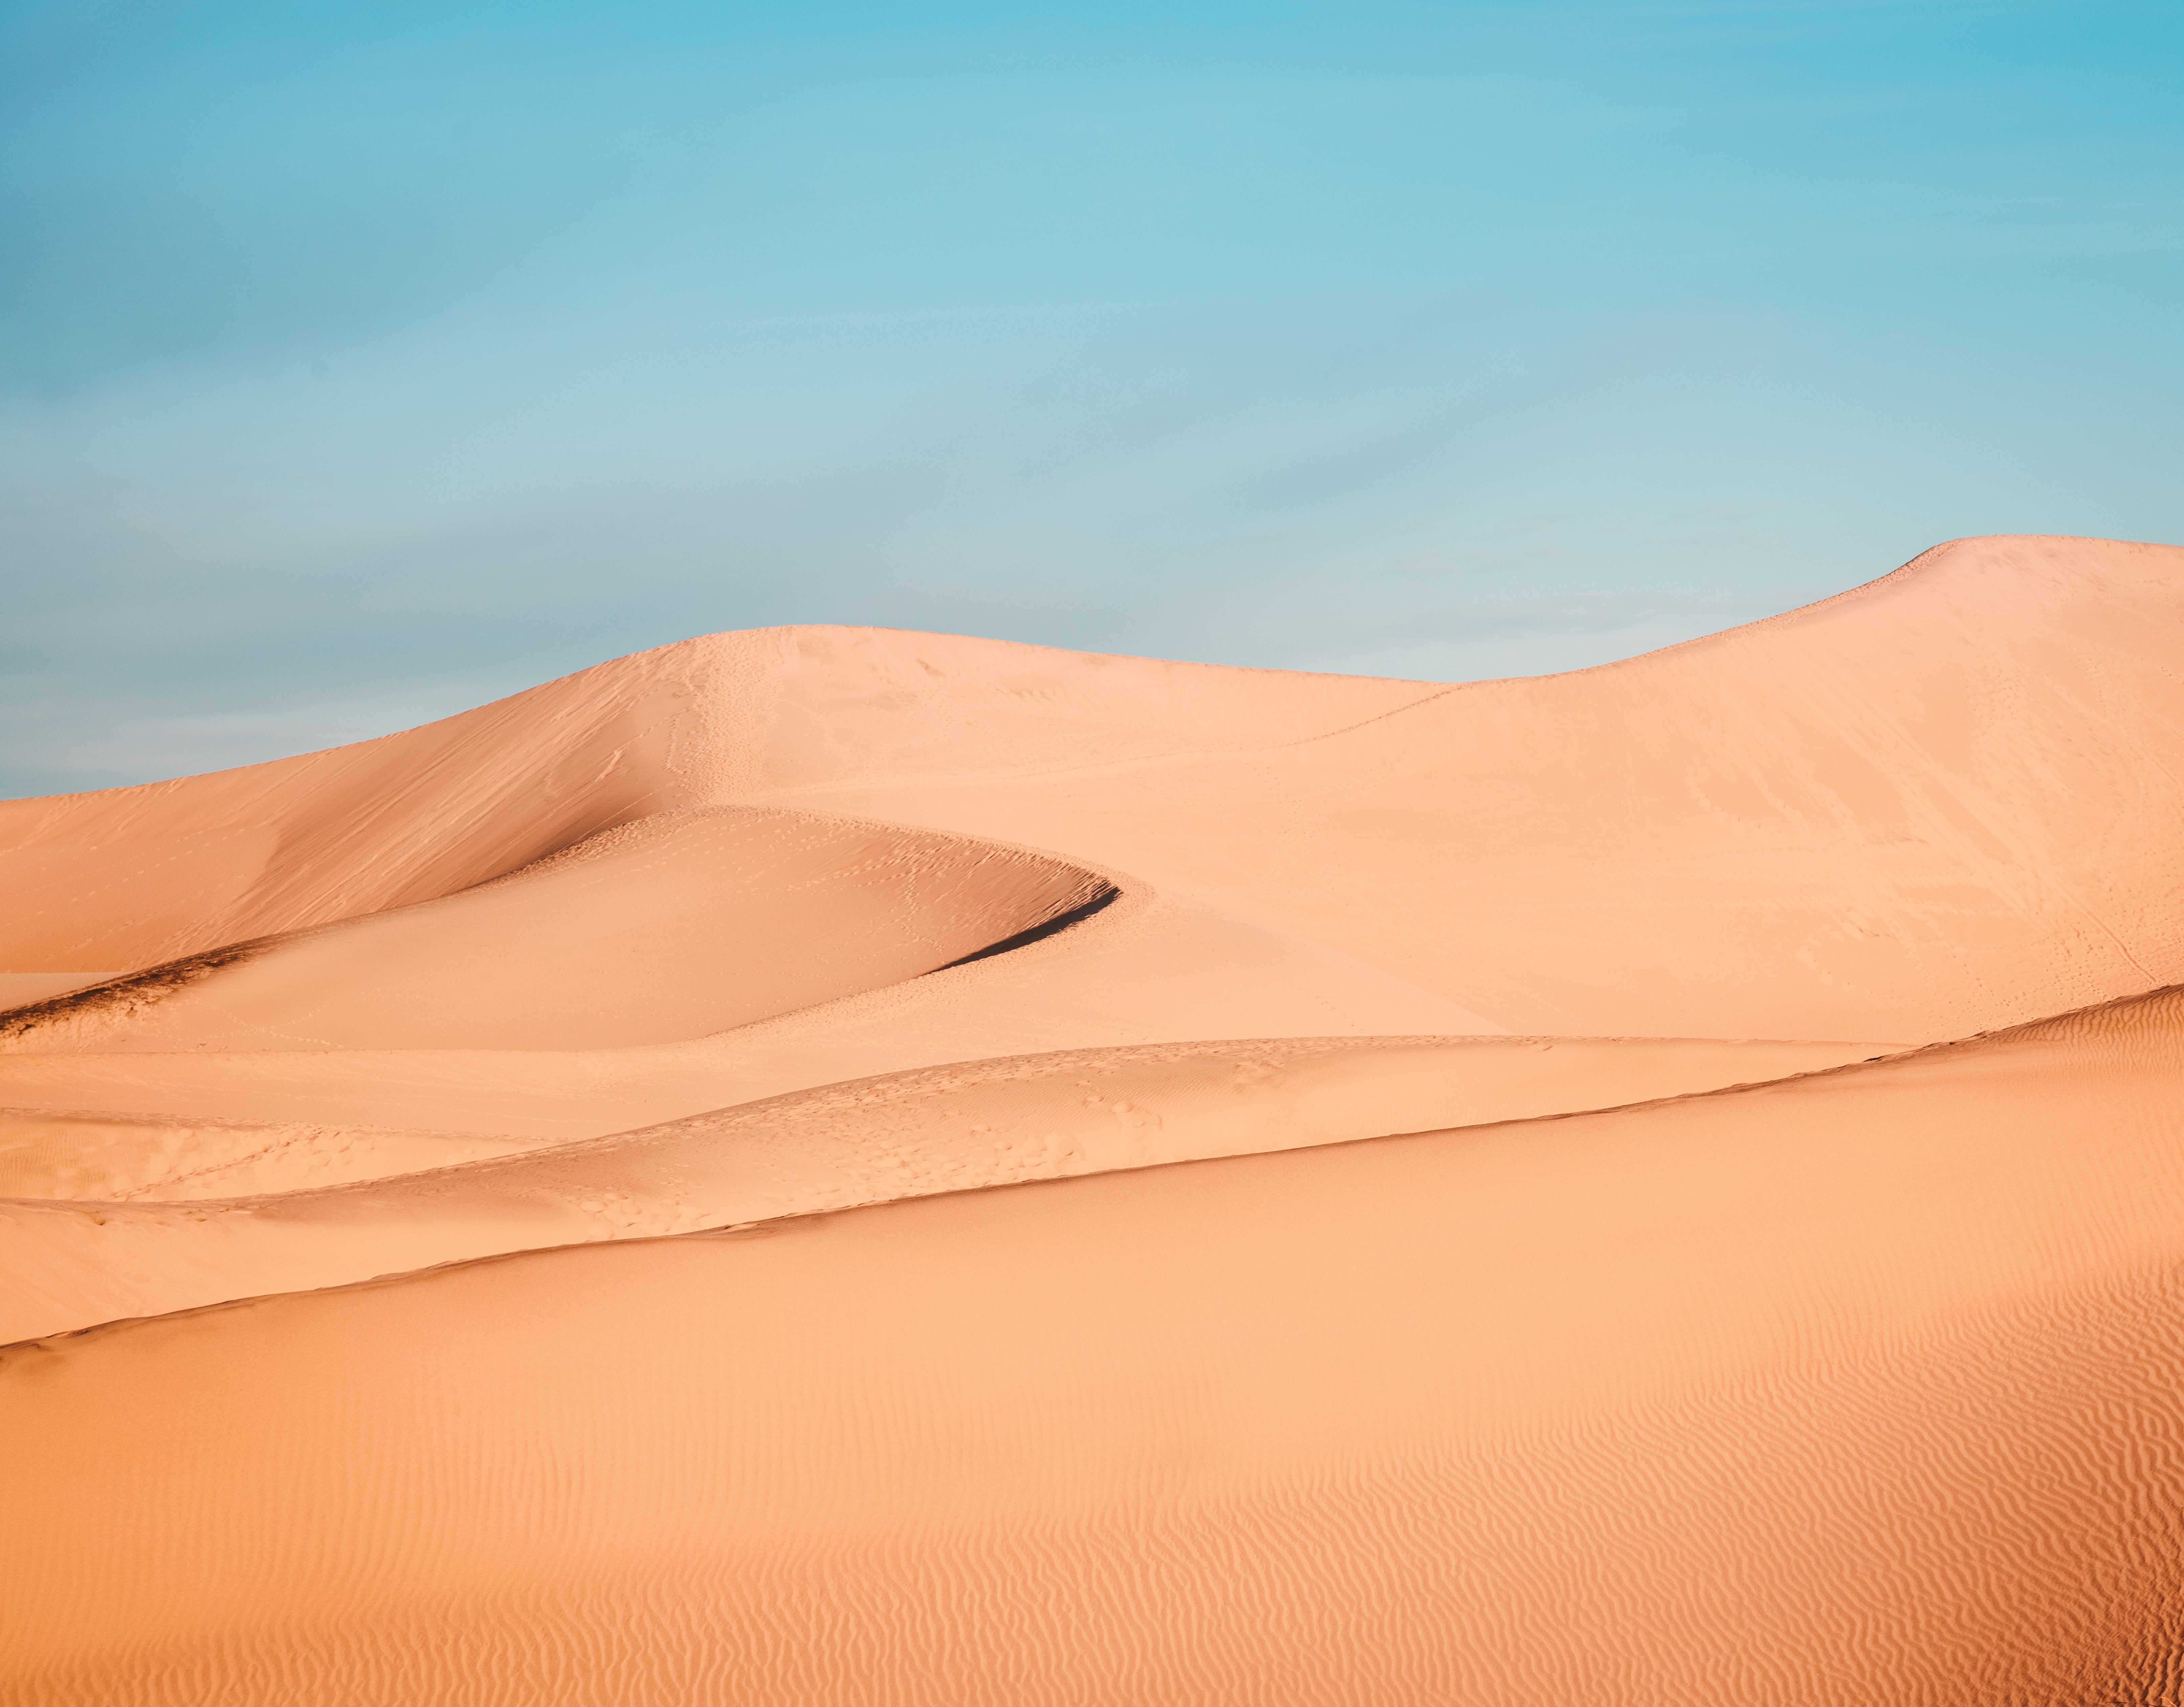 Desert Sand Background Image By Freetoedit Images